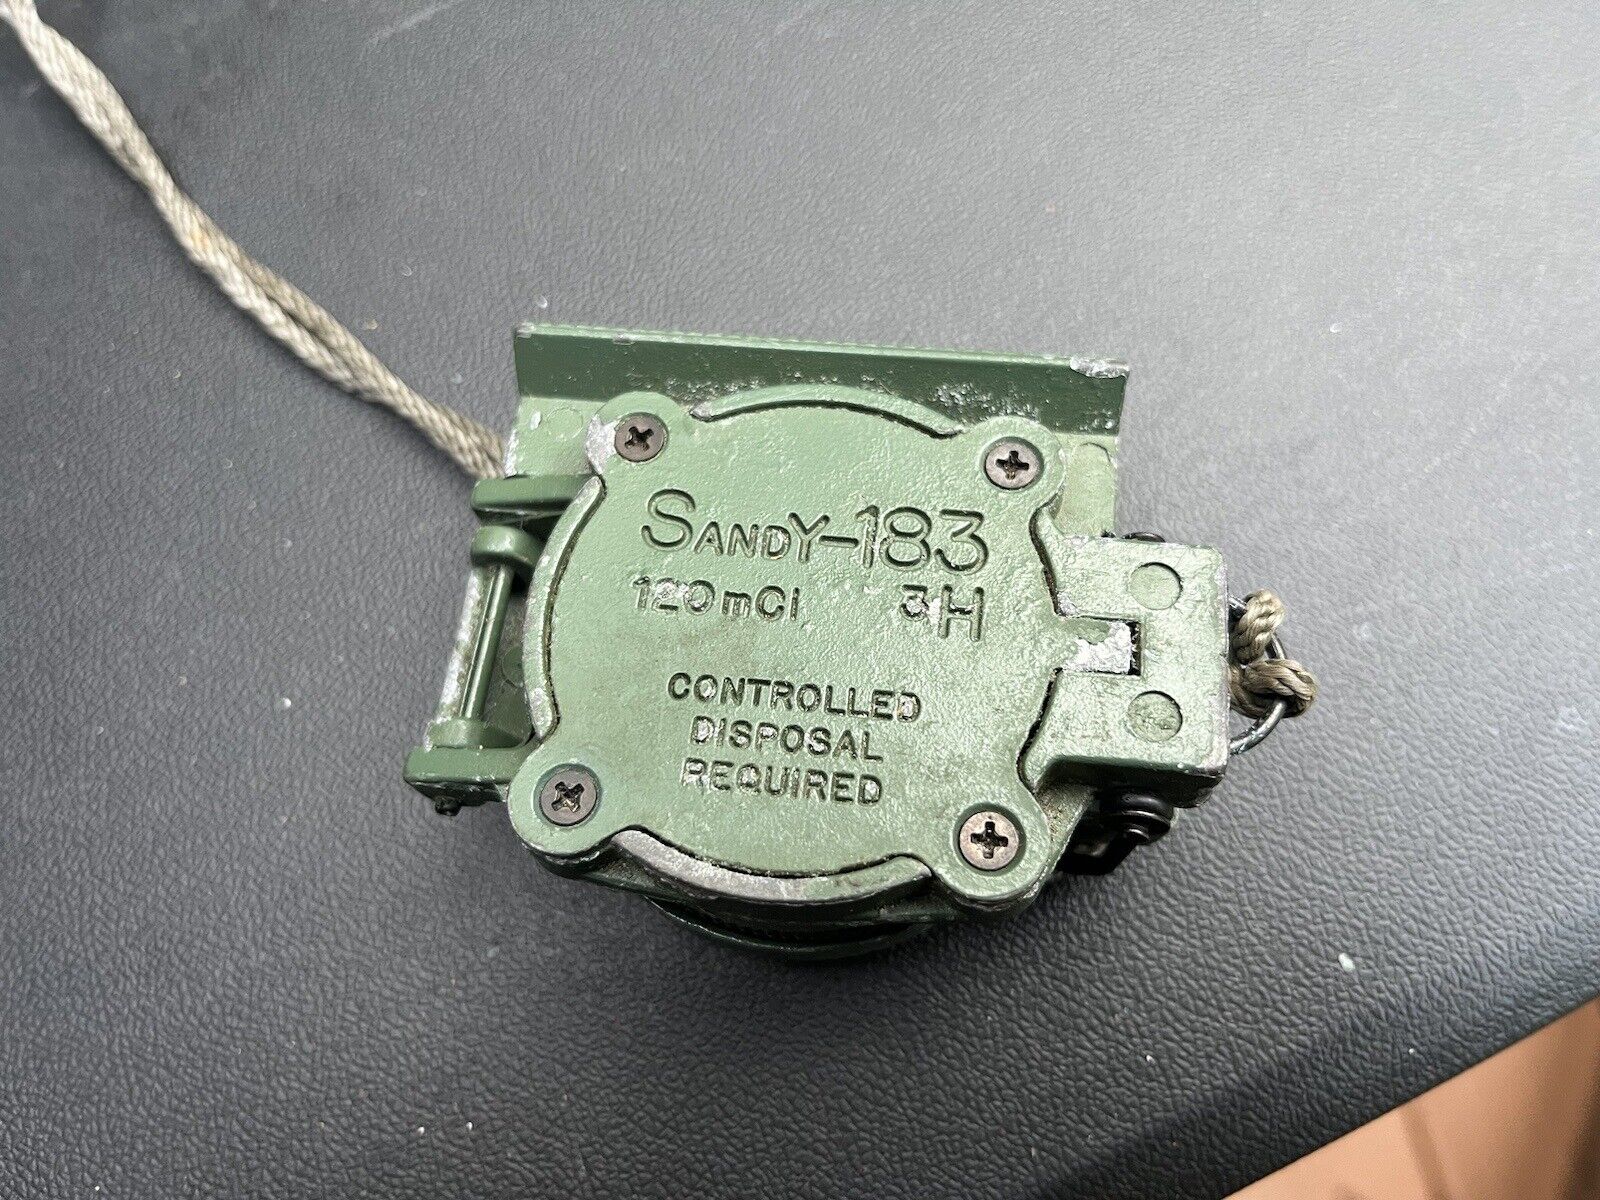 U.S. Compass Military Magnetic Sandy-183 NSN 6605-01-196-6971 1989